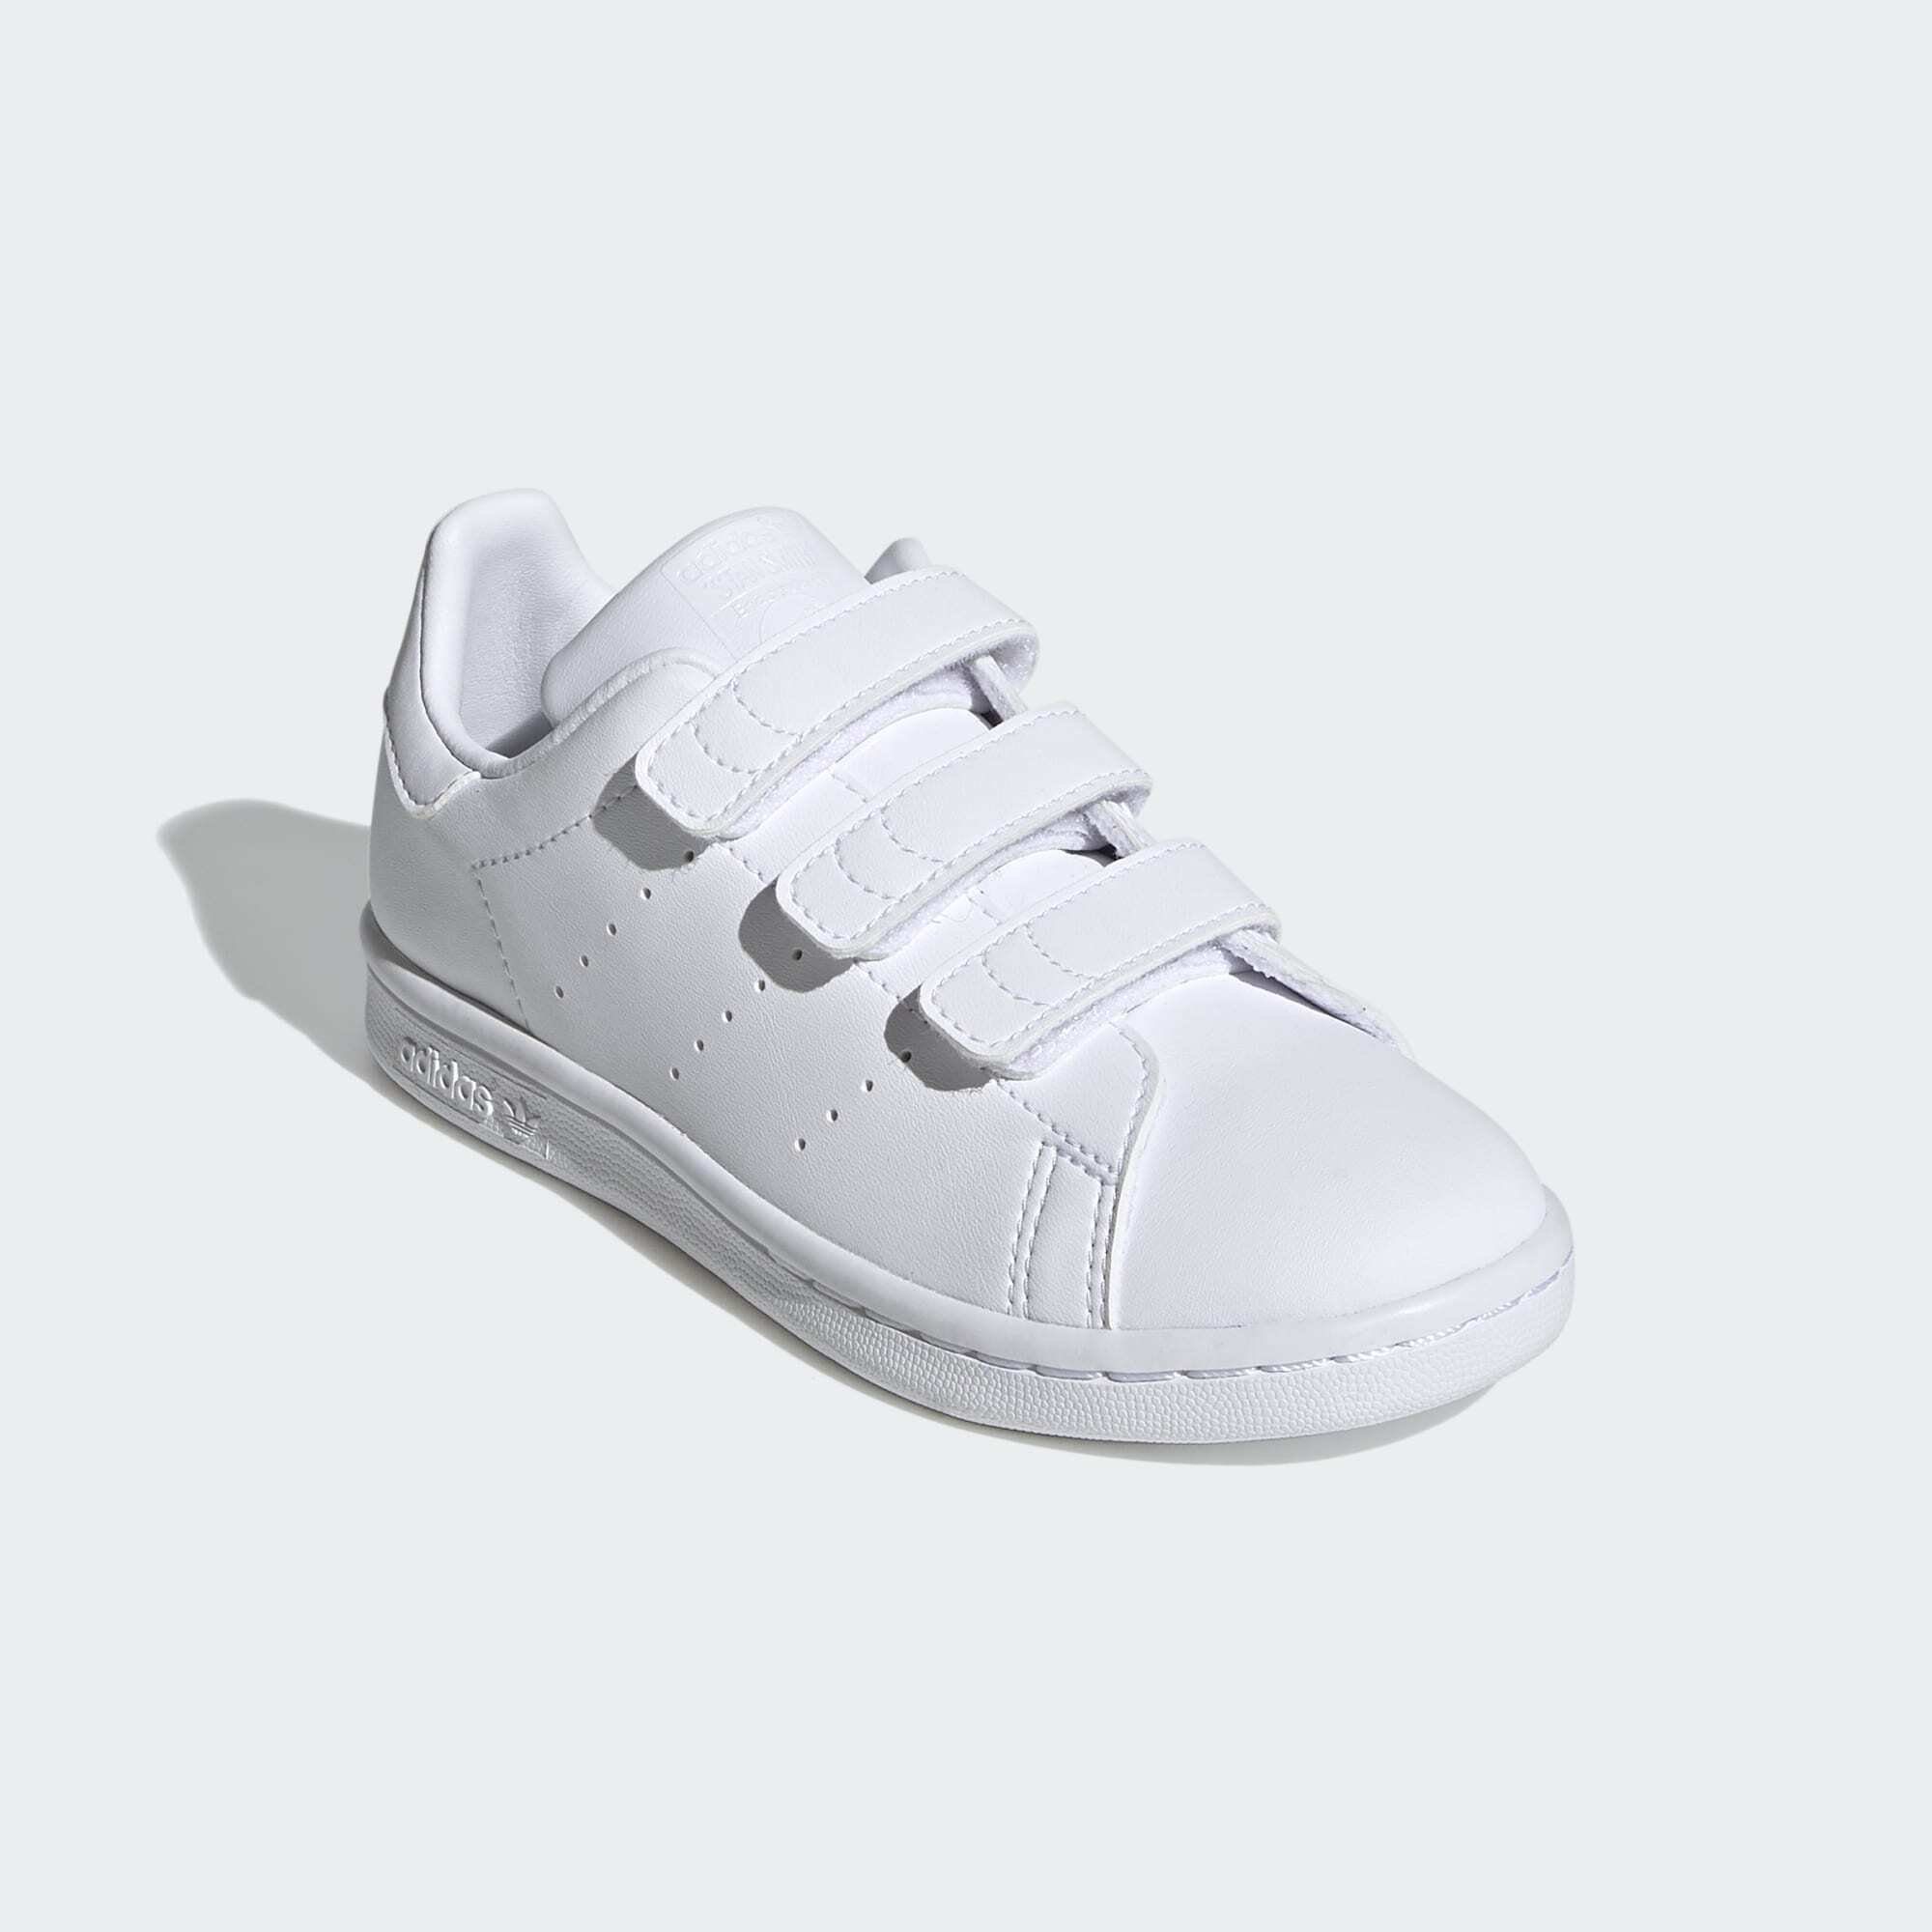 adidas Originals STAN SMITH / Sneaker Cloud / SCHUH White White White Cloud Cloud